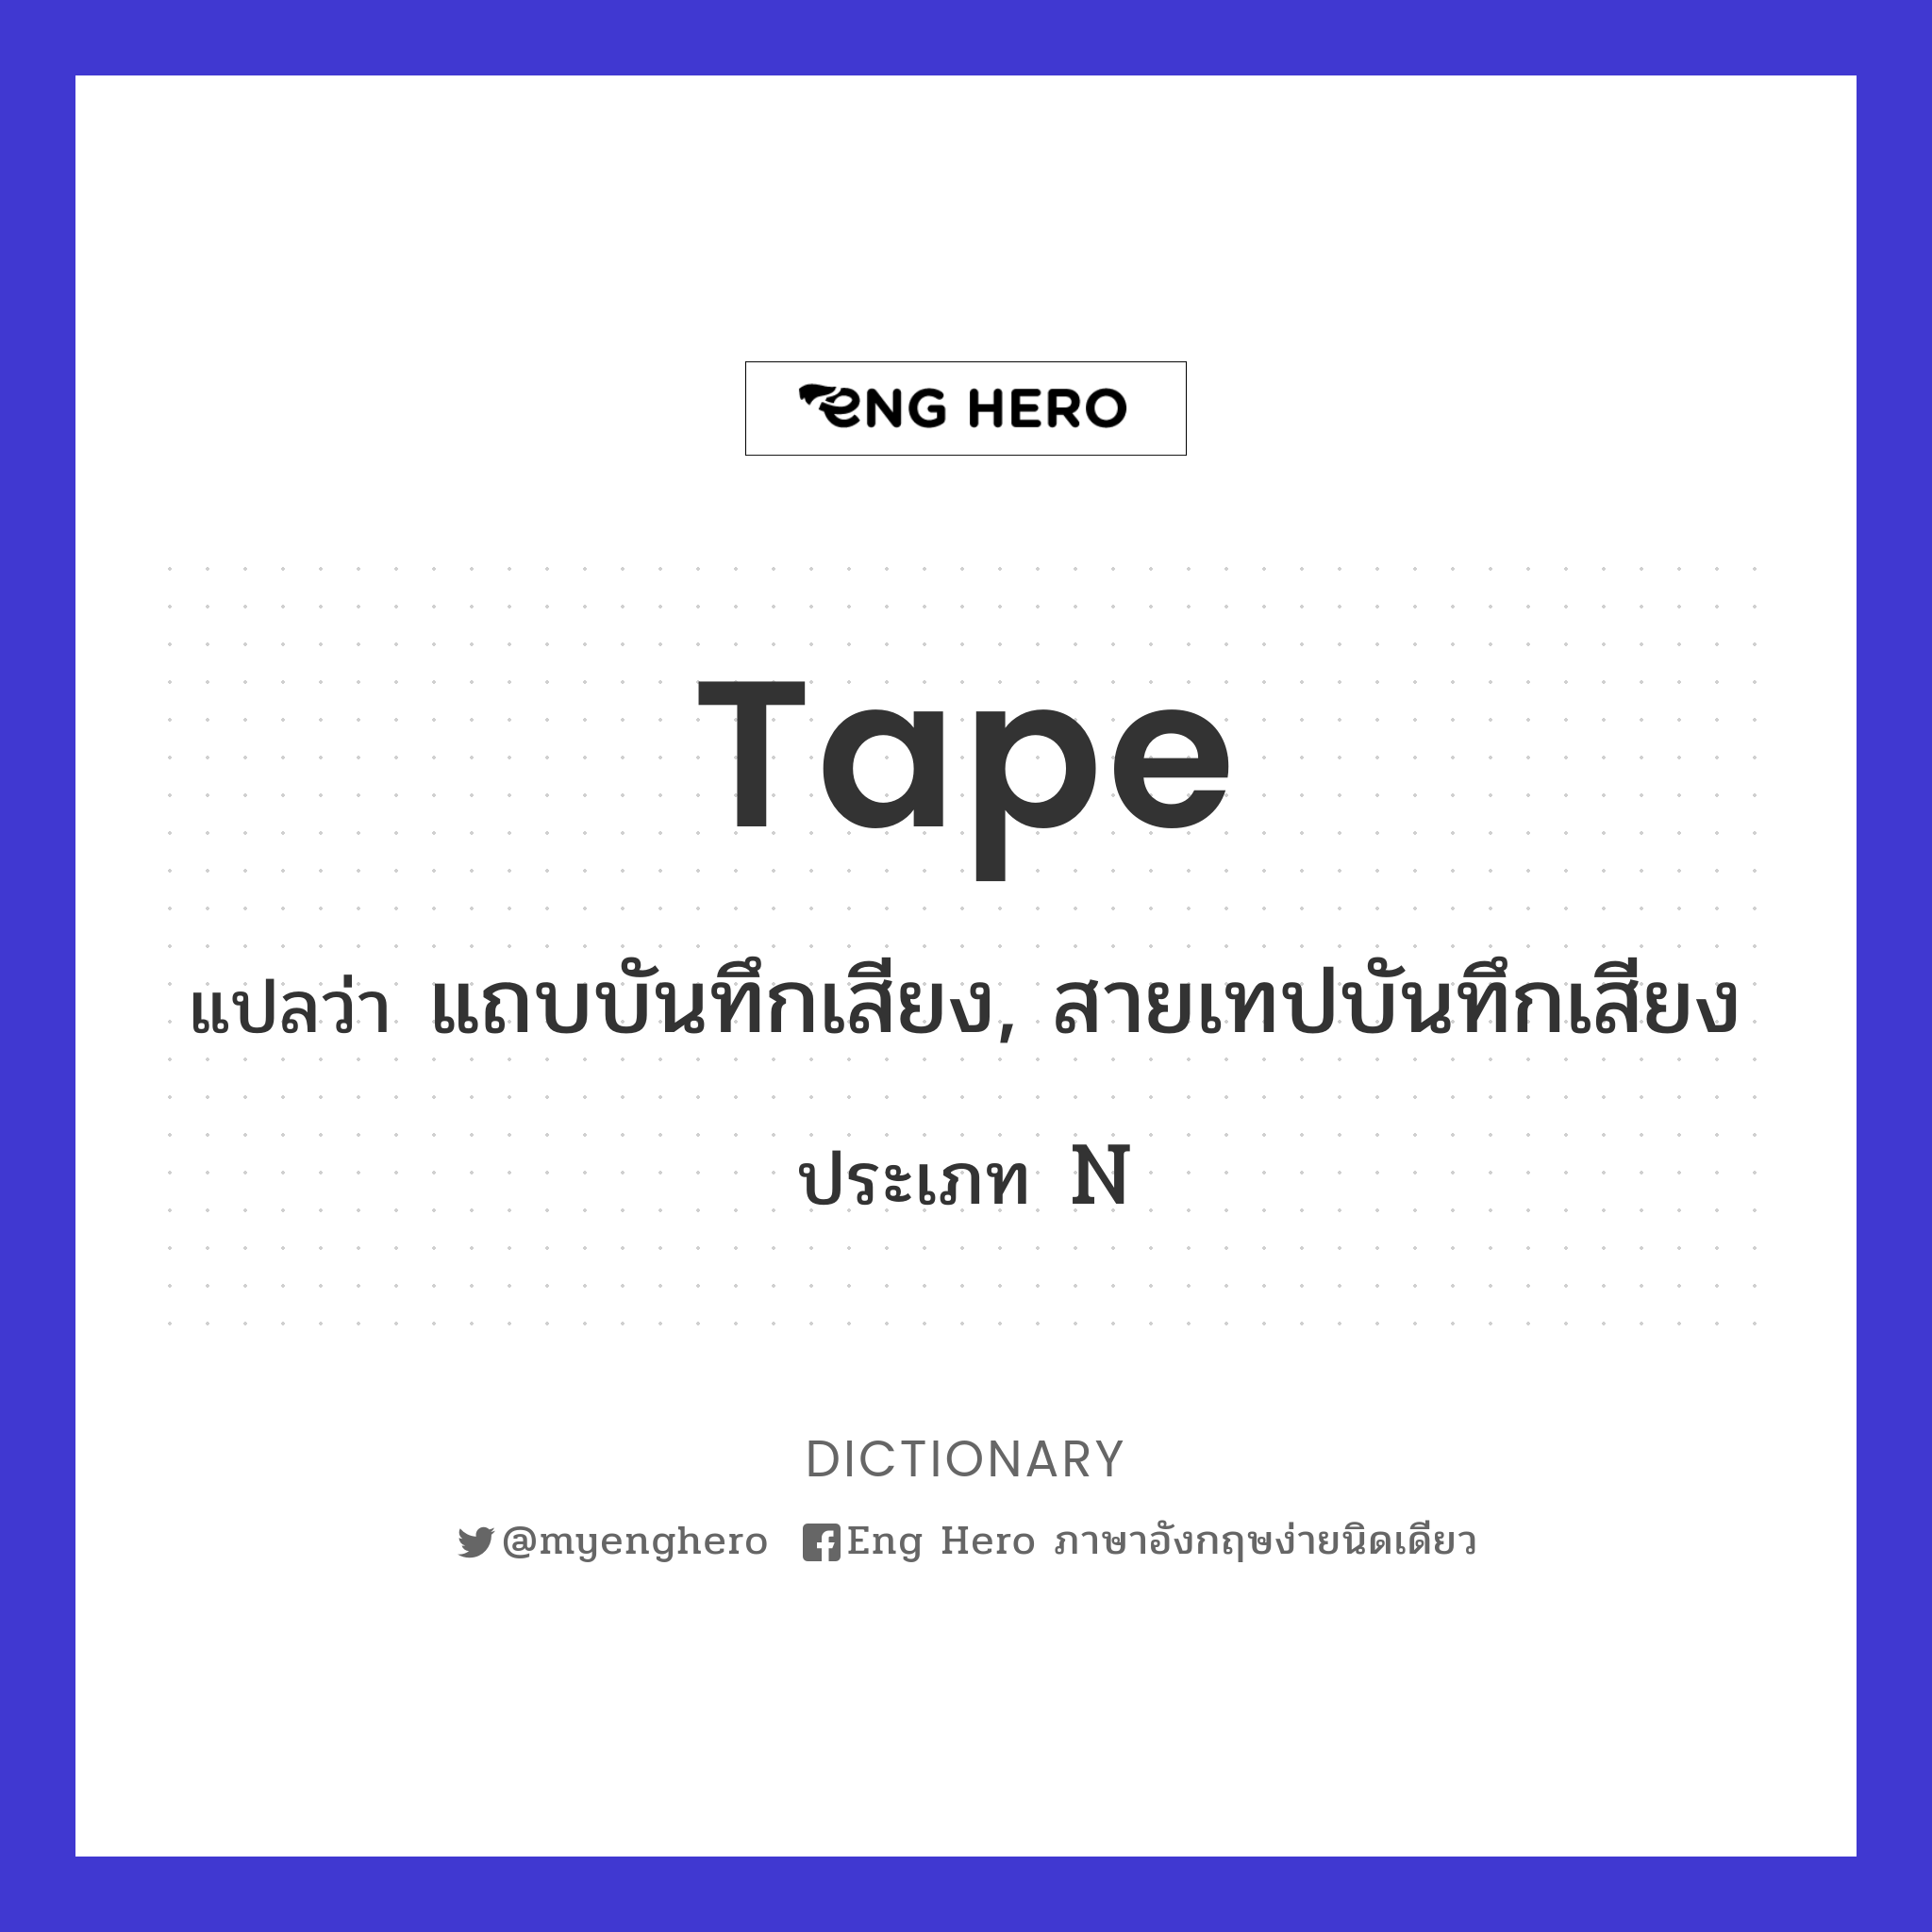 tape